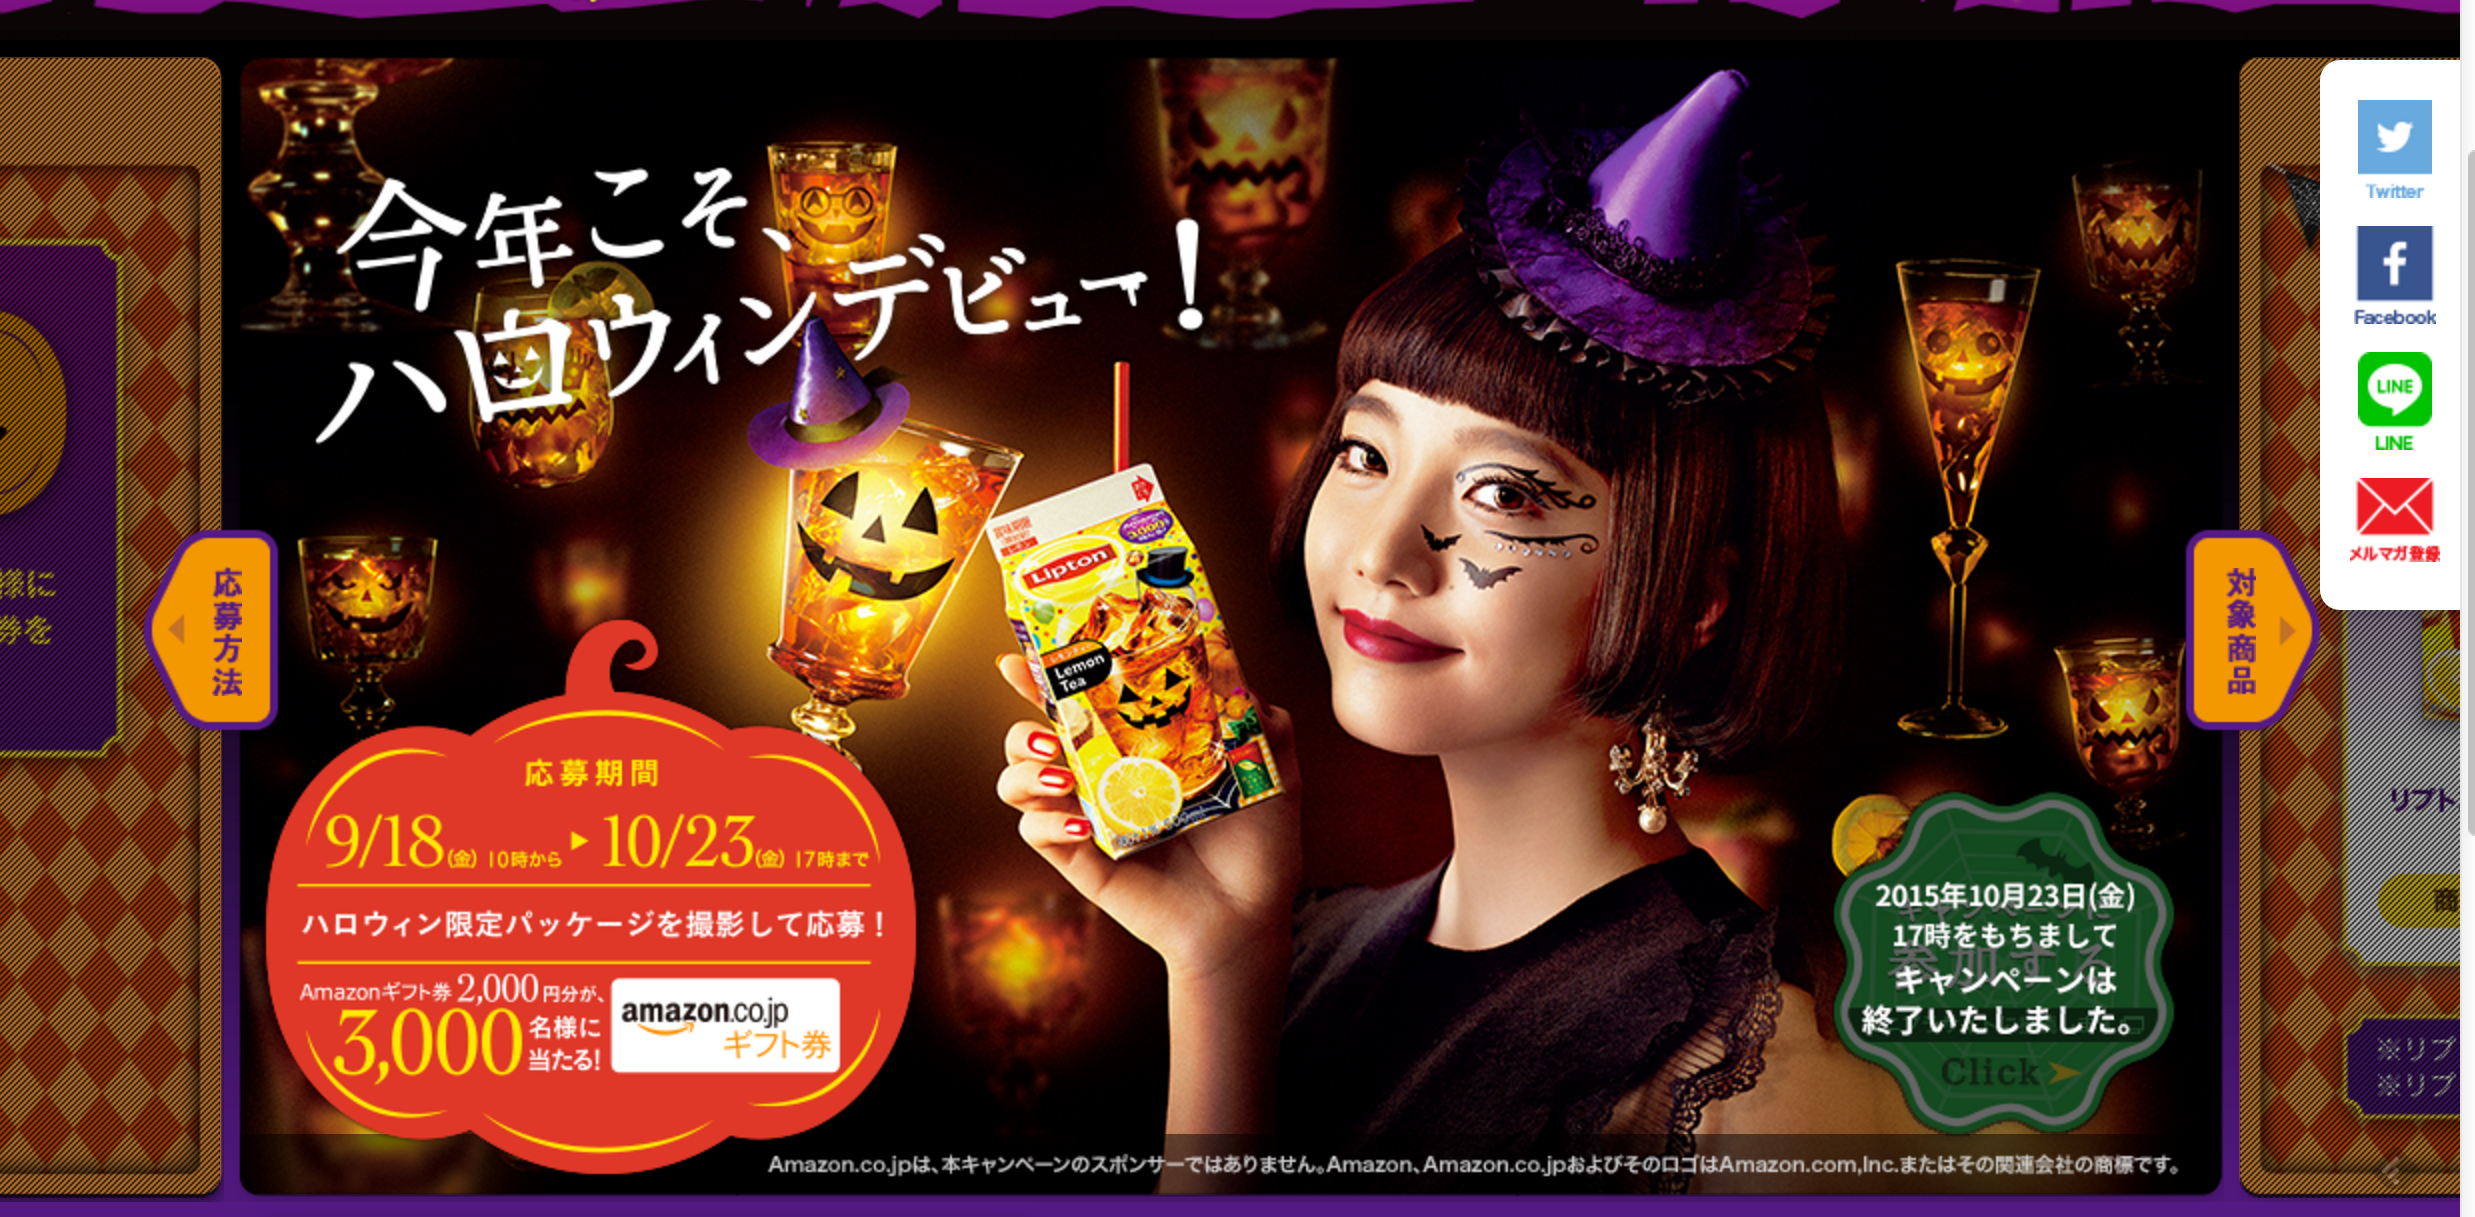 Halloween in Japan 2015: Beverages